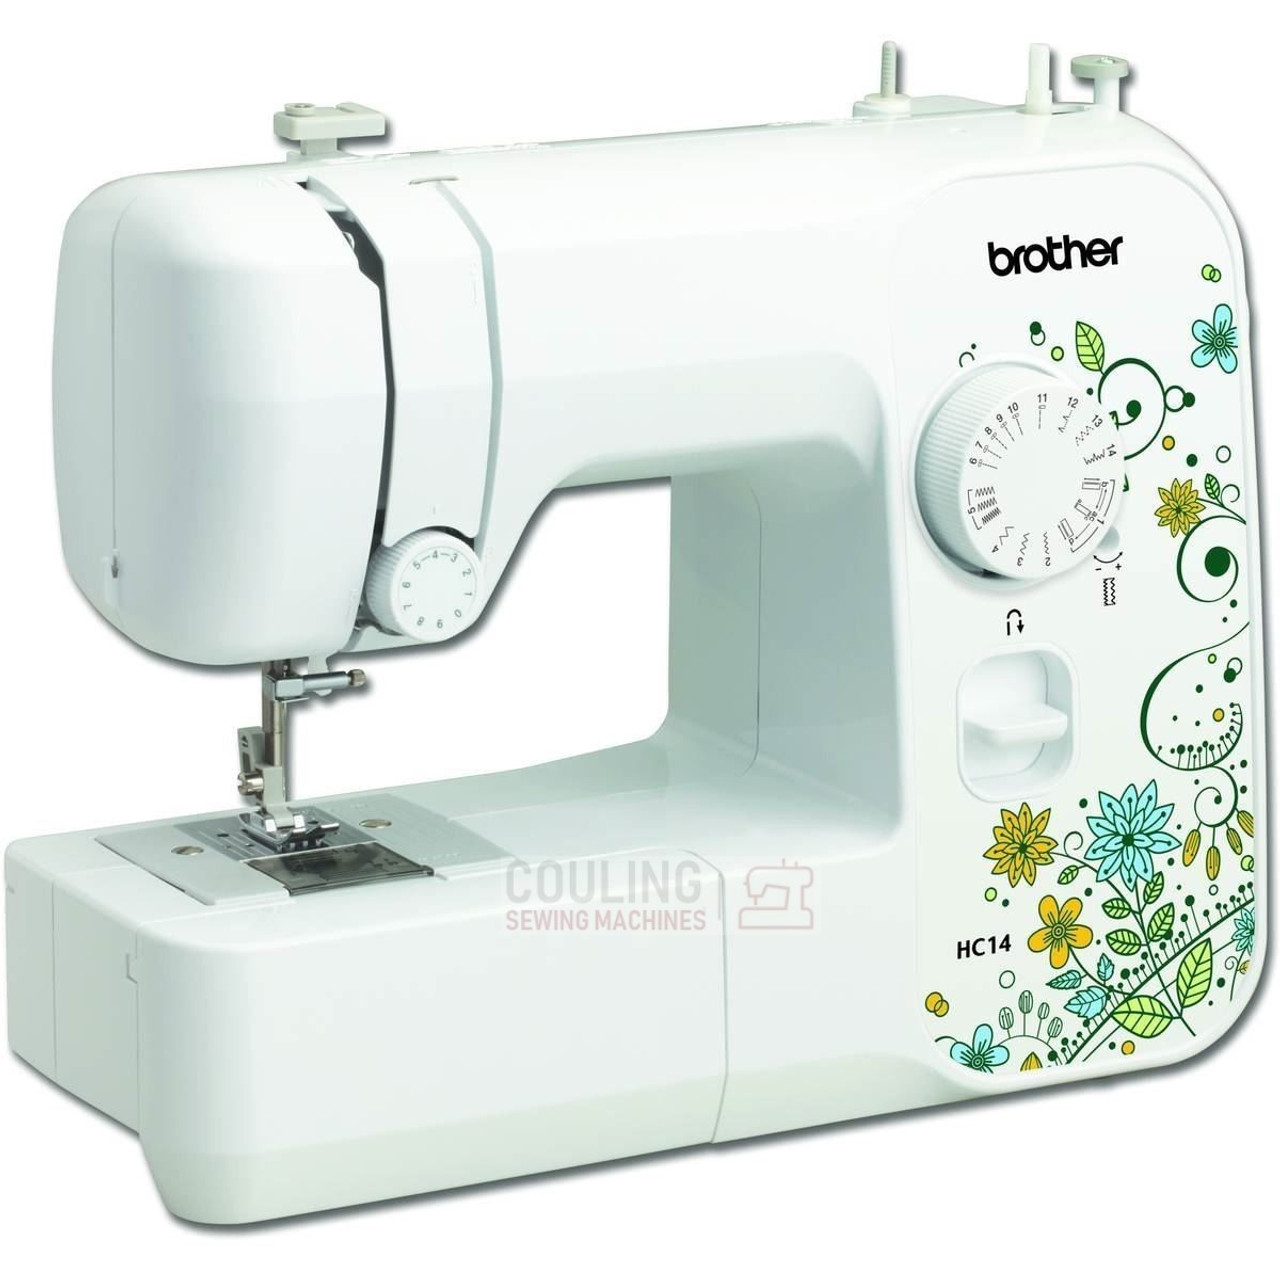 Brother HC14 Sewing Machine